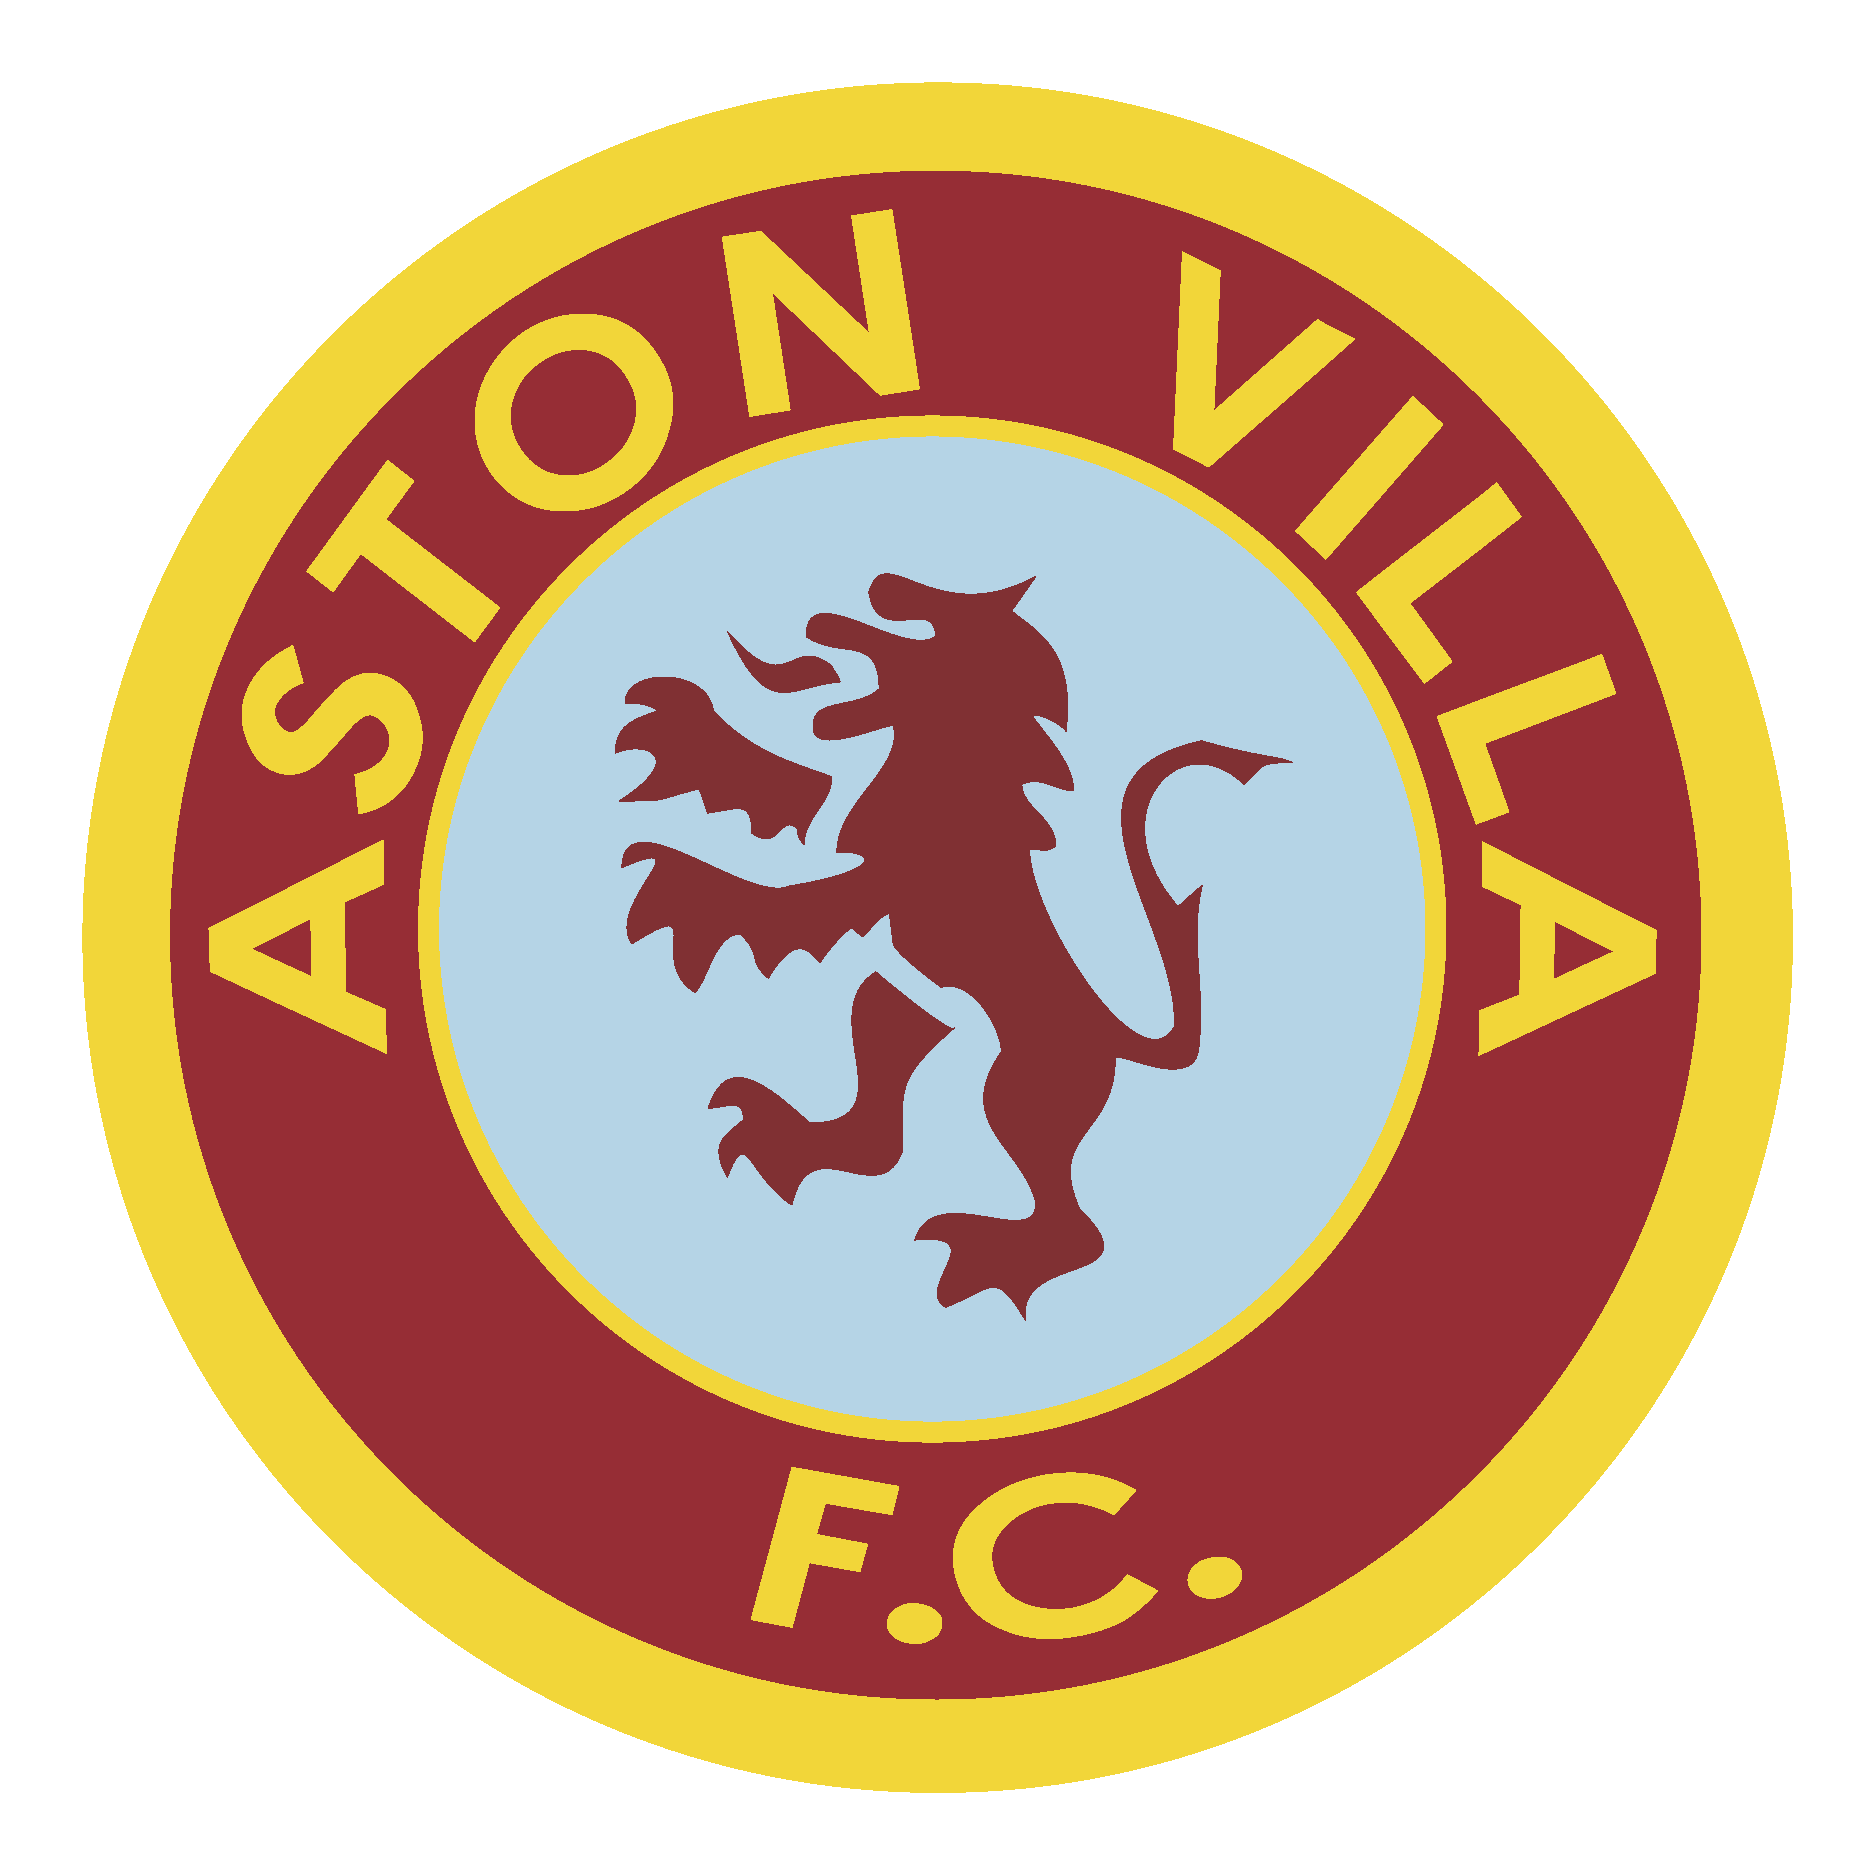 ASTON VILLA FC Logo Vector